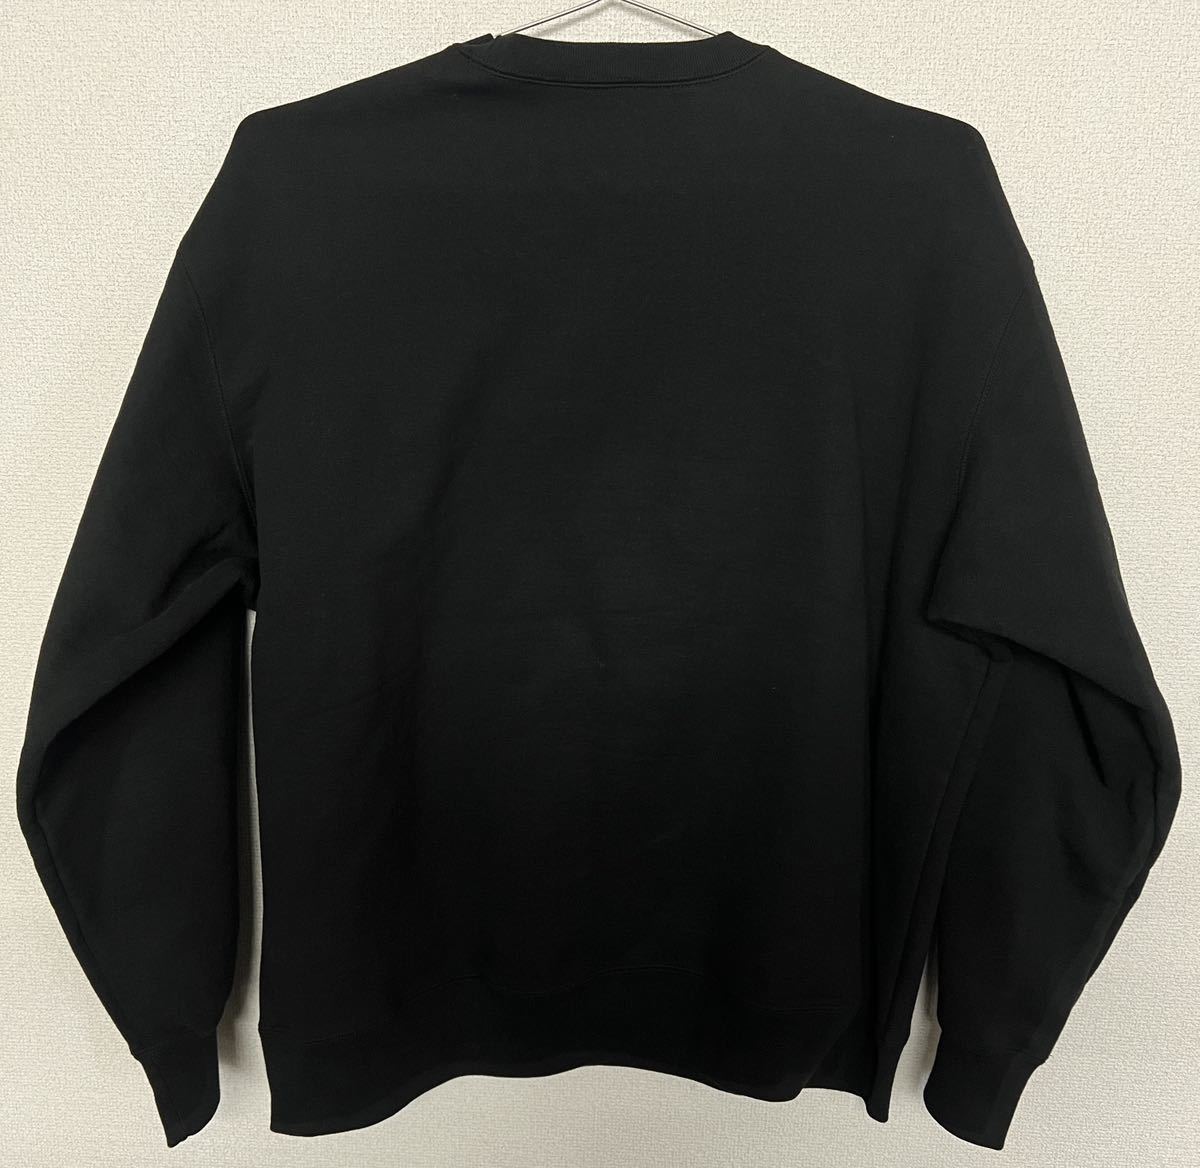 【XL】Box Logo Crewneck Sweatshirt 試着のみ 正規オンライン購入 クルーネック スウェット トレーナー シュプリーム ボックスロゴ _画像2